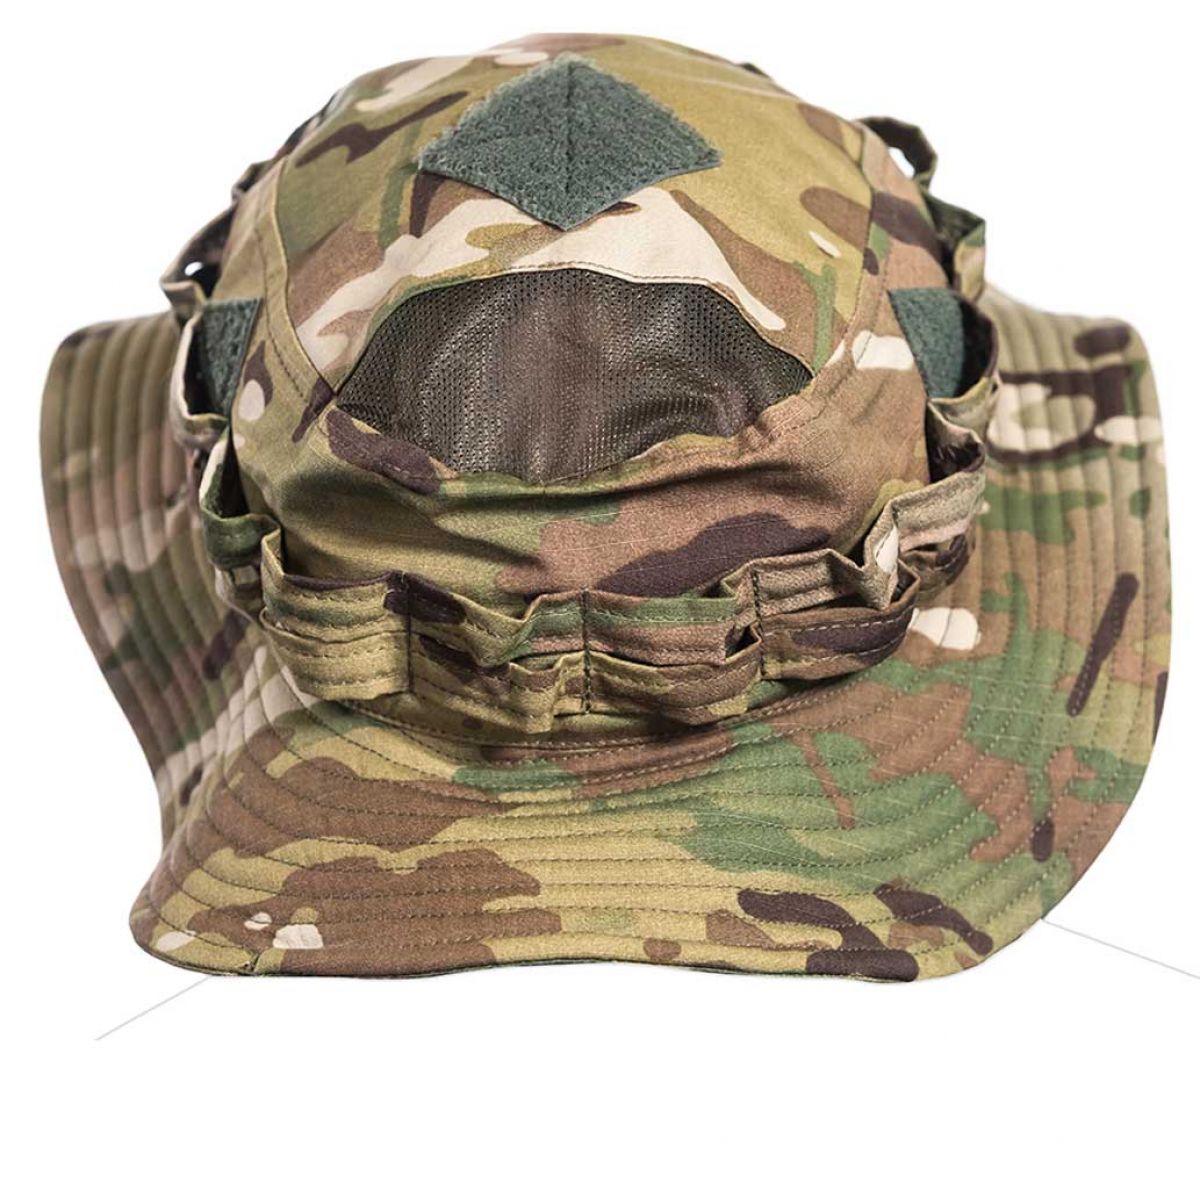 Boonie hat | Sun protection & mesh ventilation | UF PRO